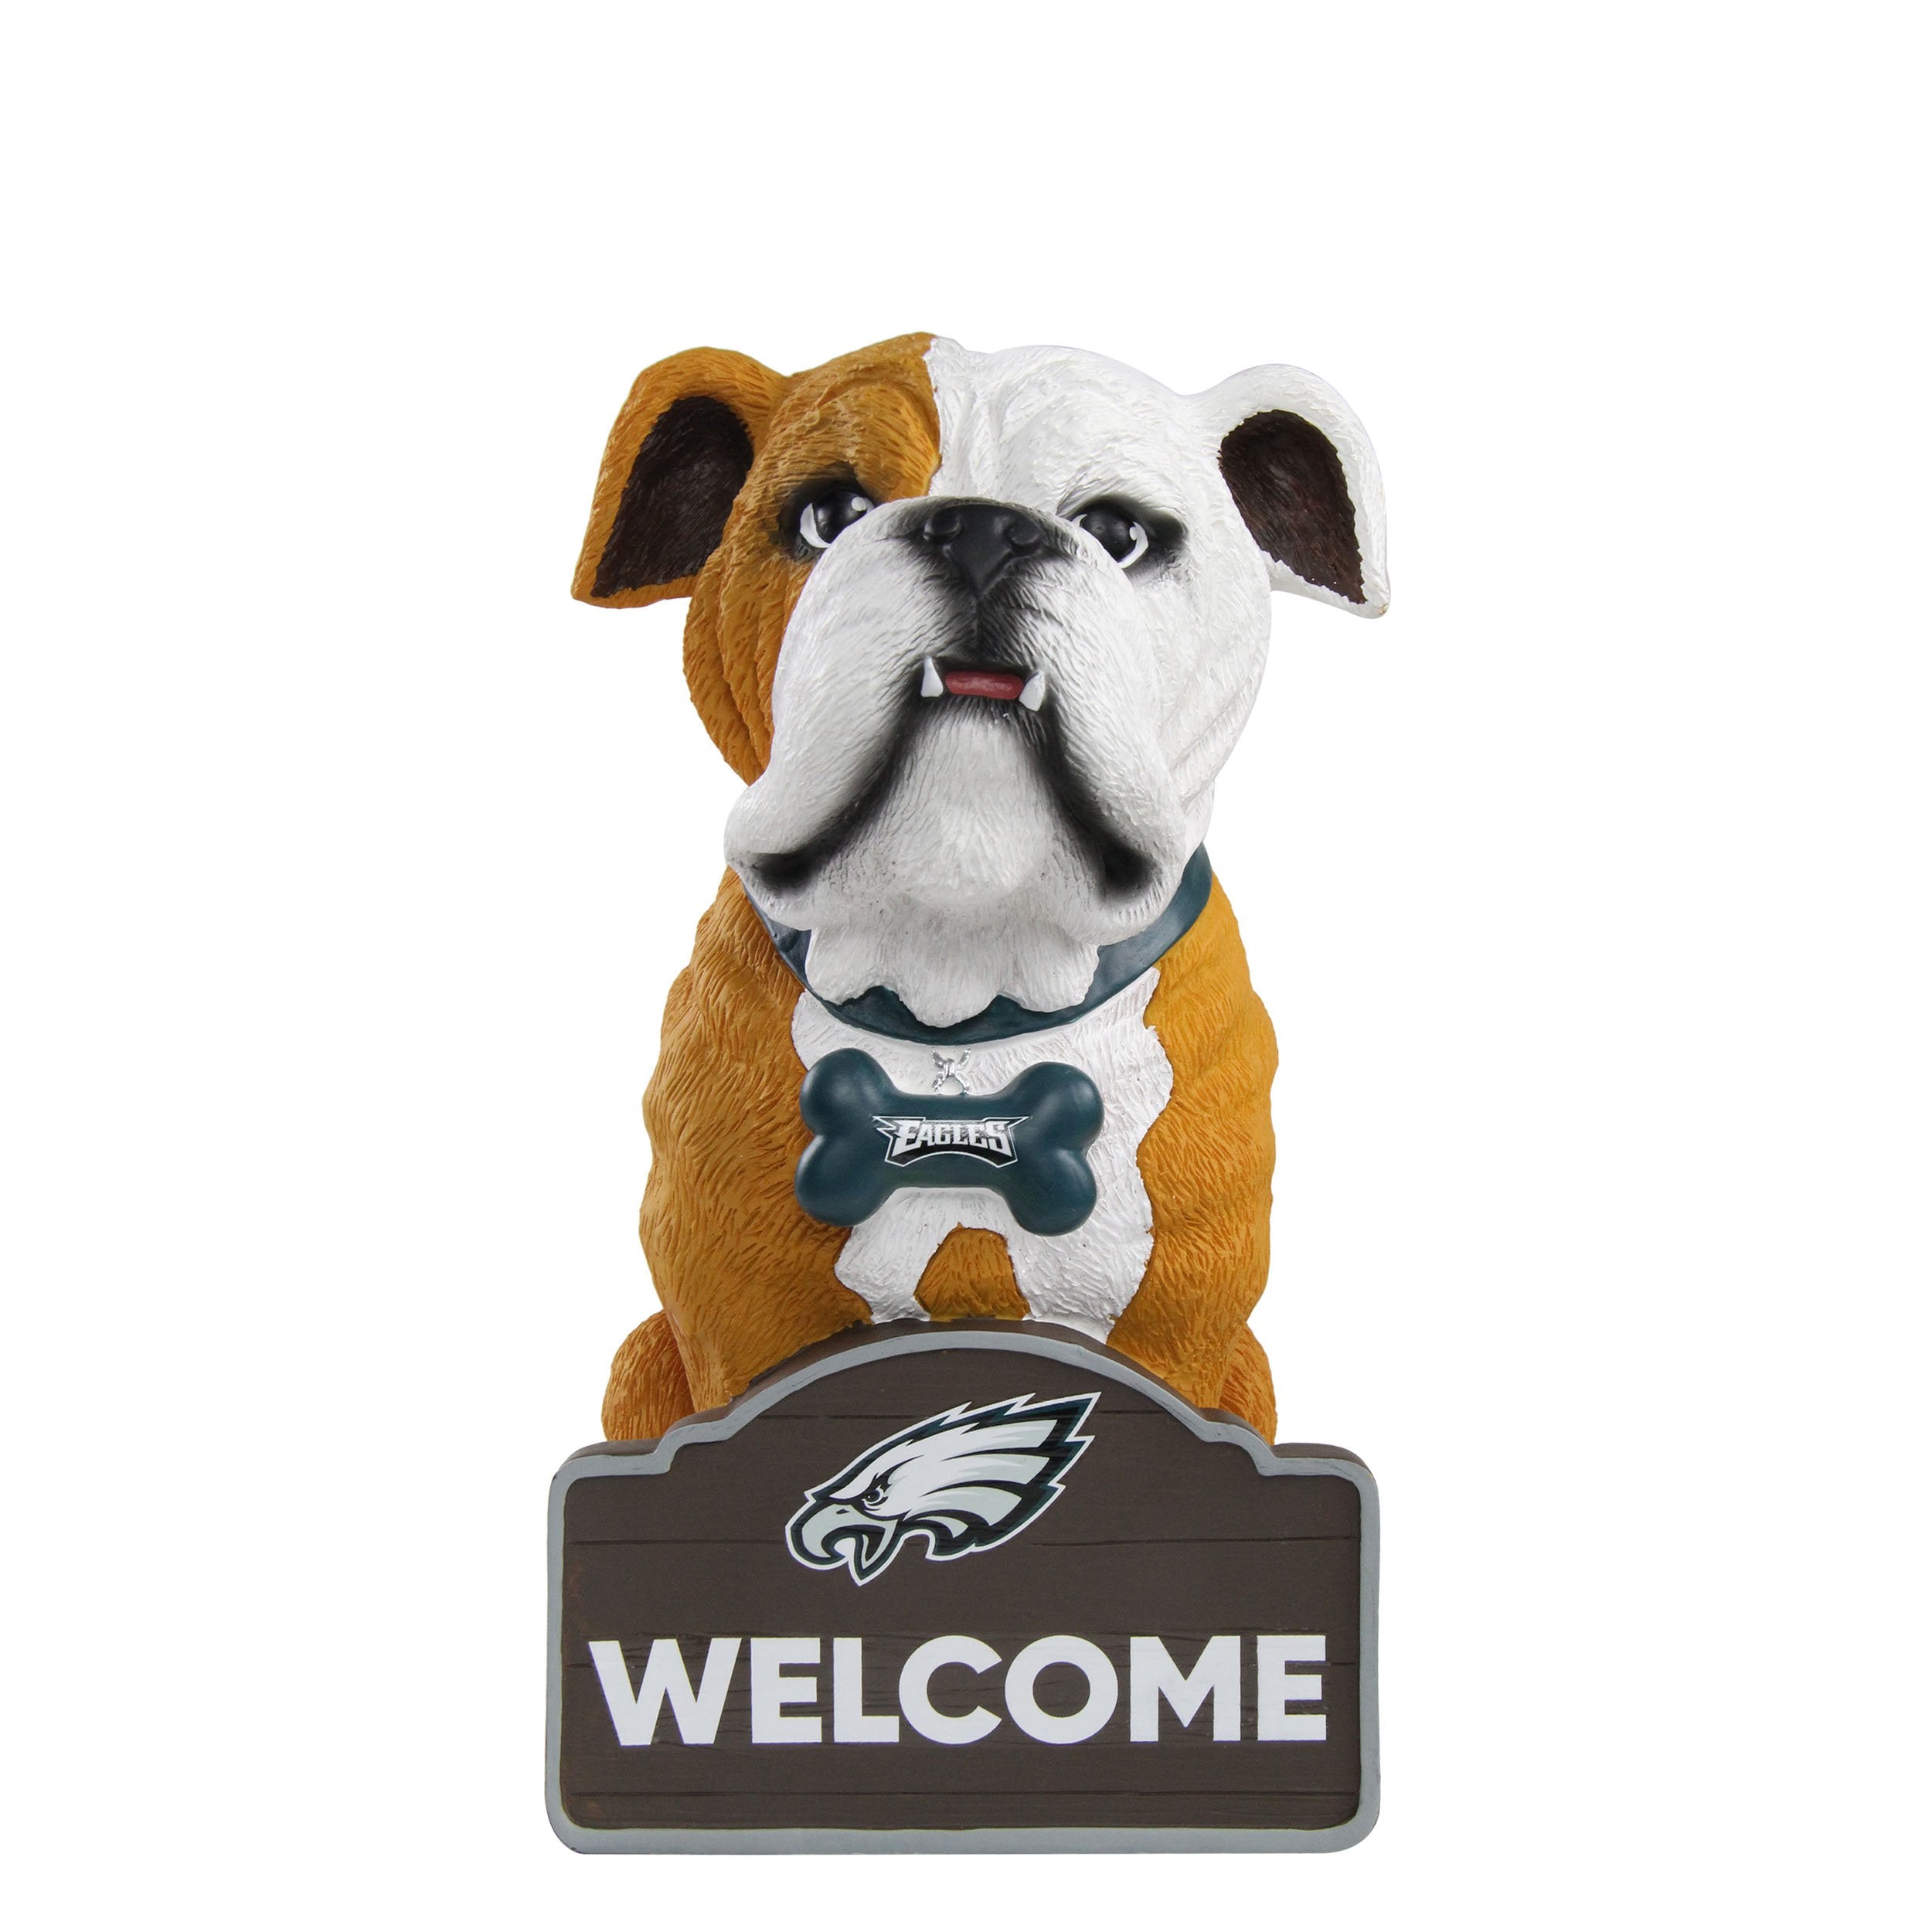 Philadelphia Eagles Bulldog Statue Officially Licensed by NFL